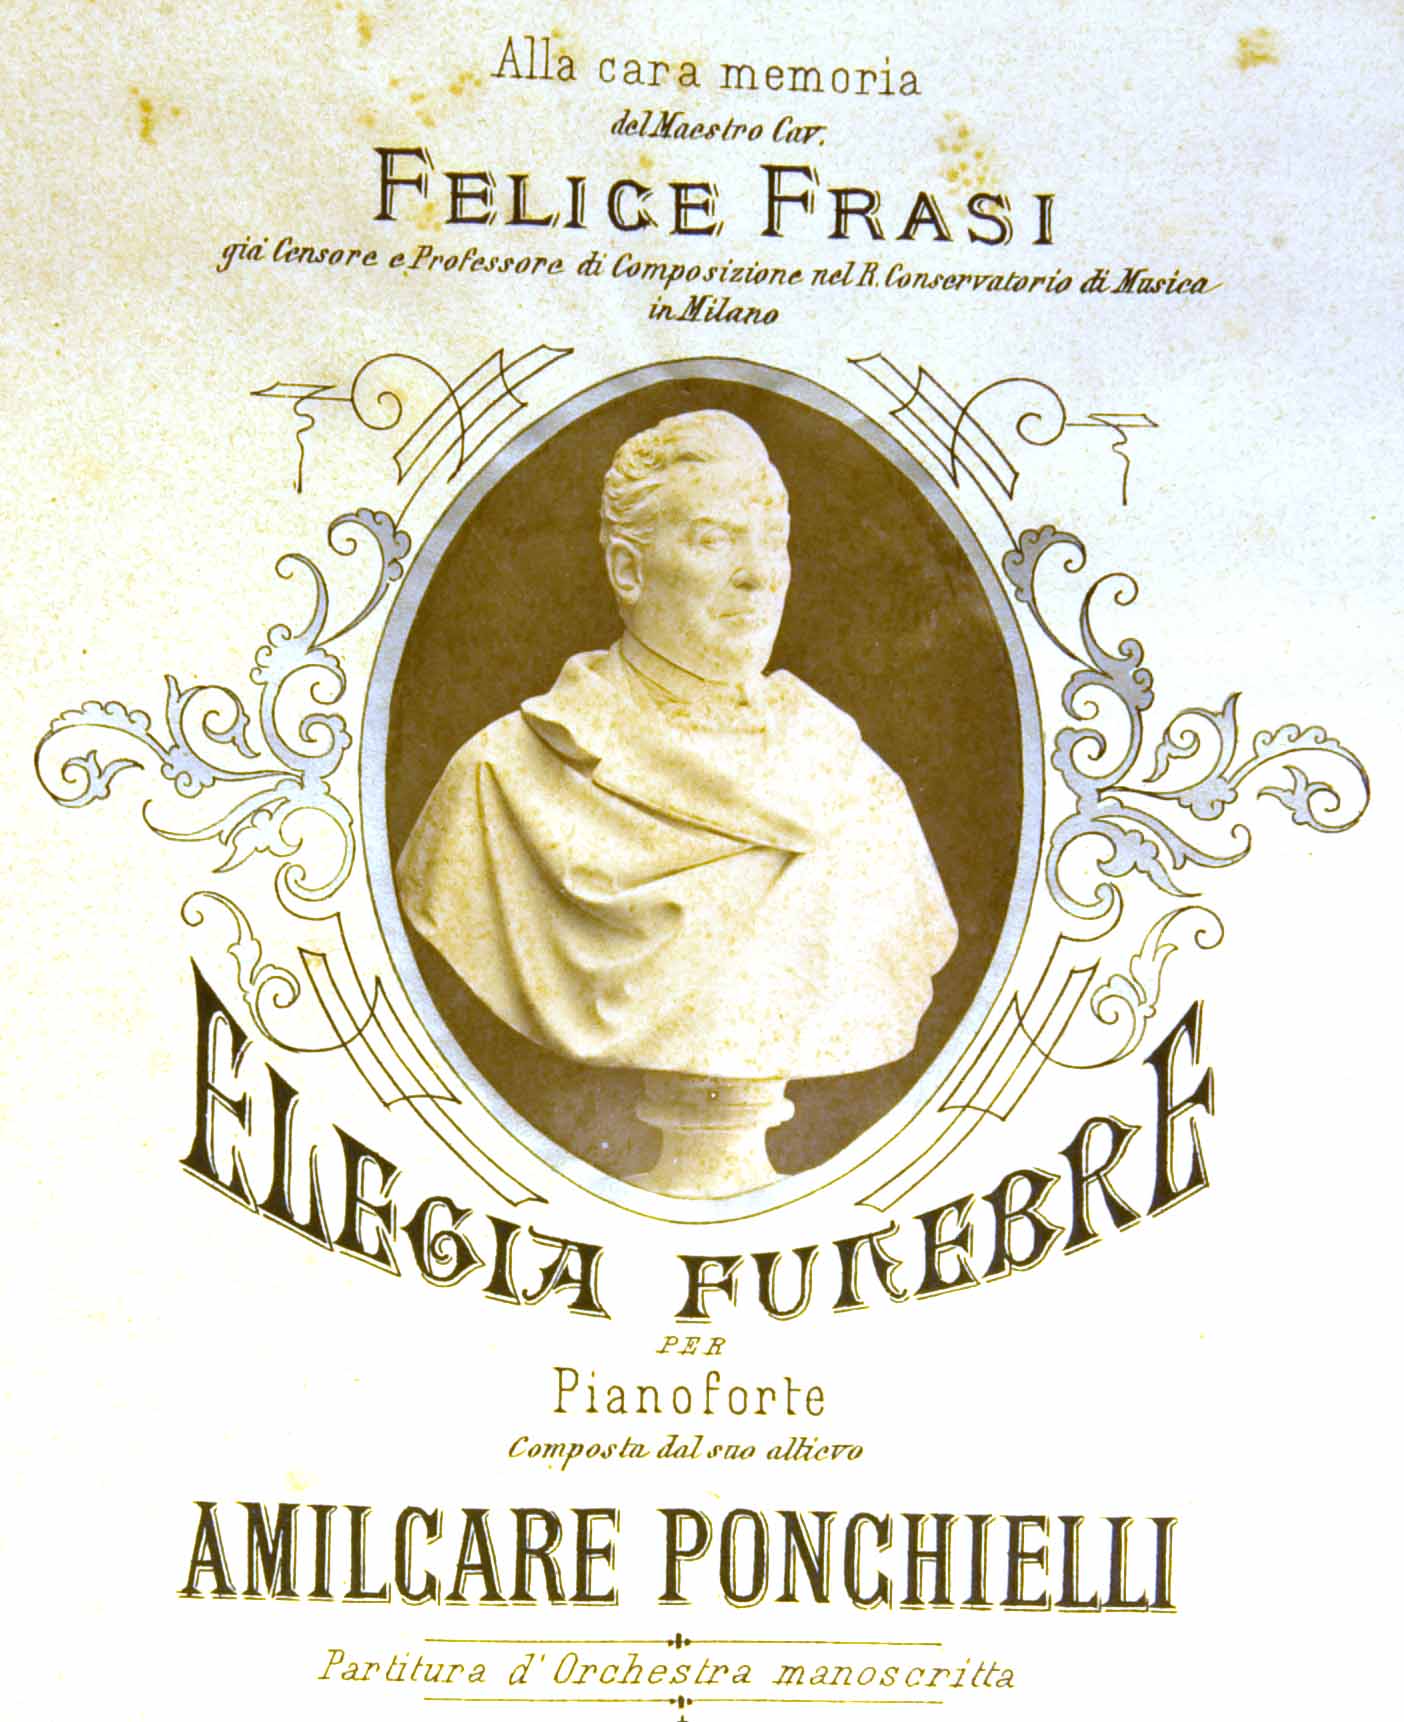 Elegia funebre in onore di Felice Frasi, Op. 89